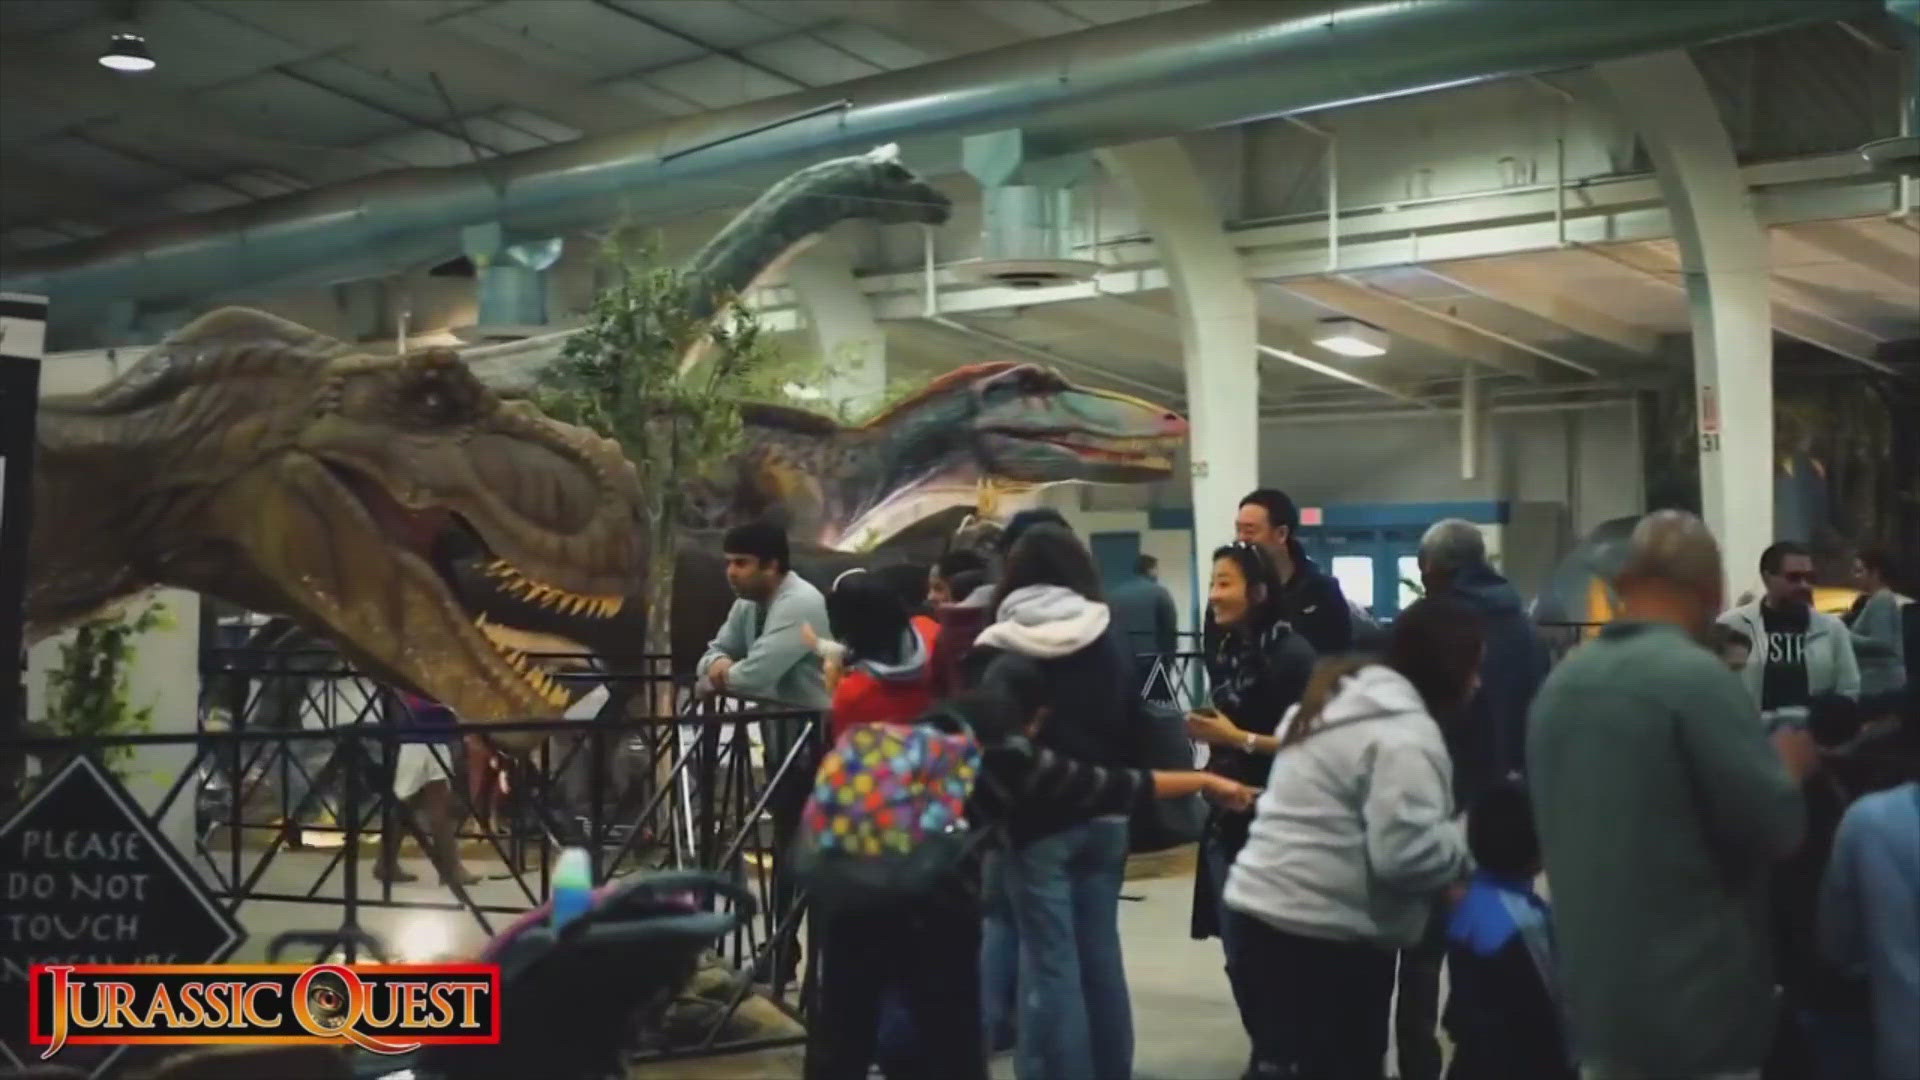 Herd of life-size animatronic dinosaurs migrated to Freeman Coliseum